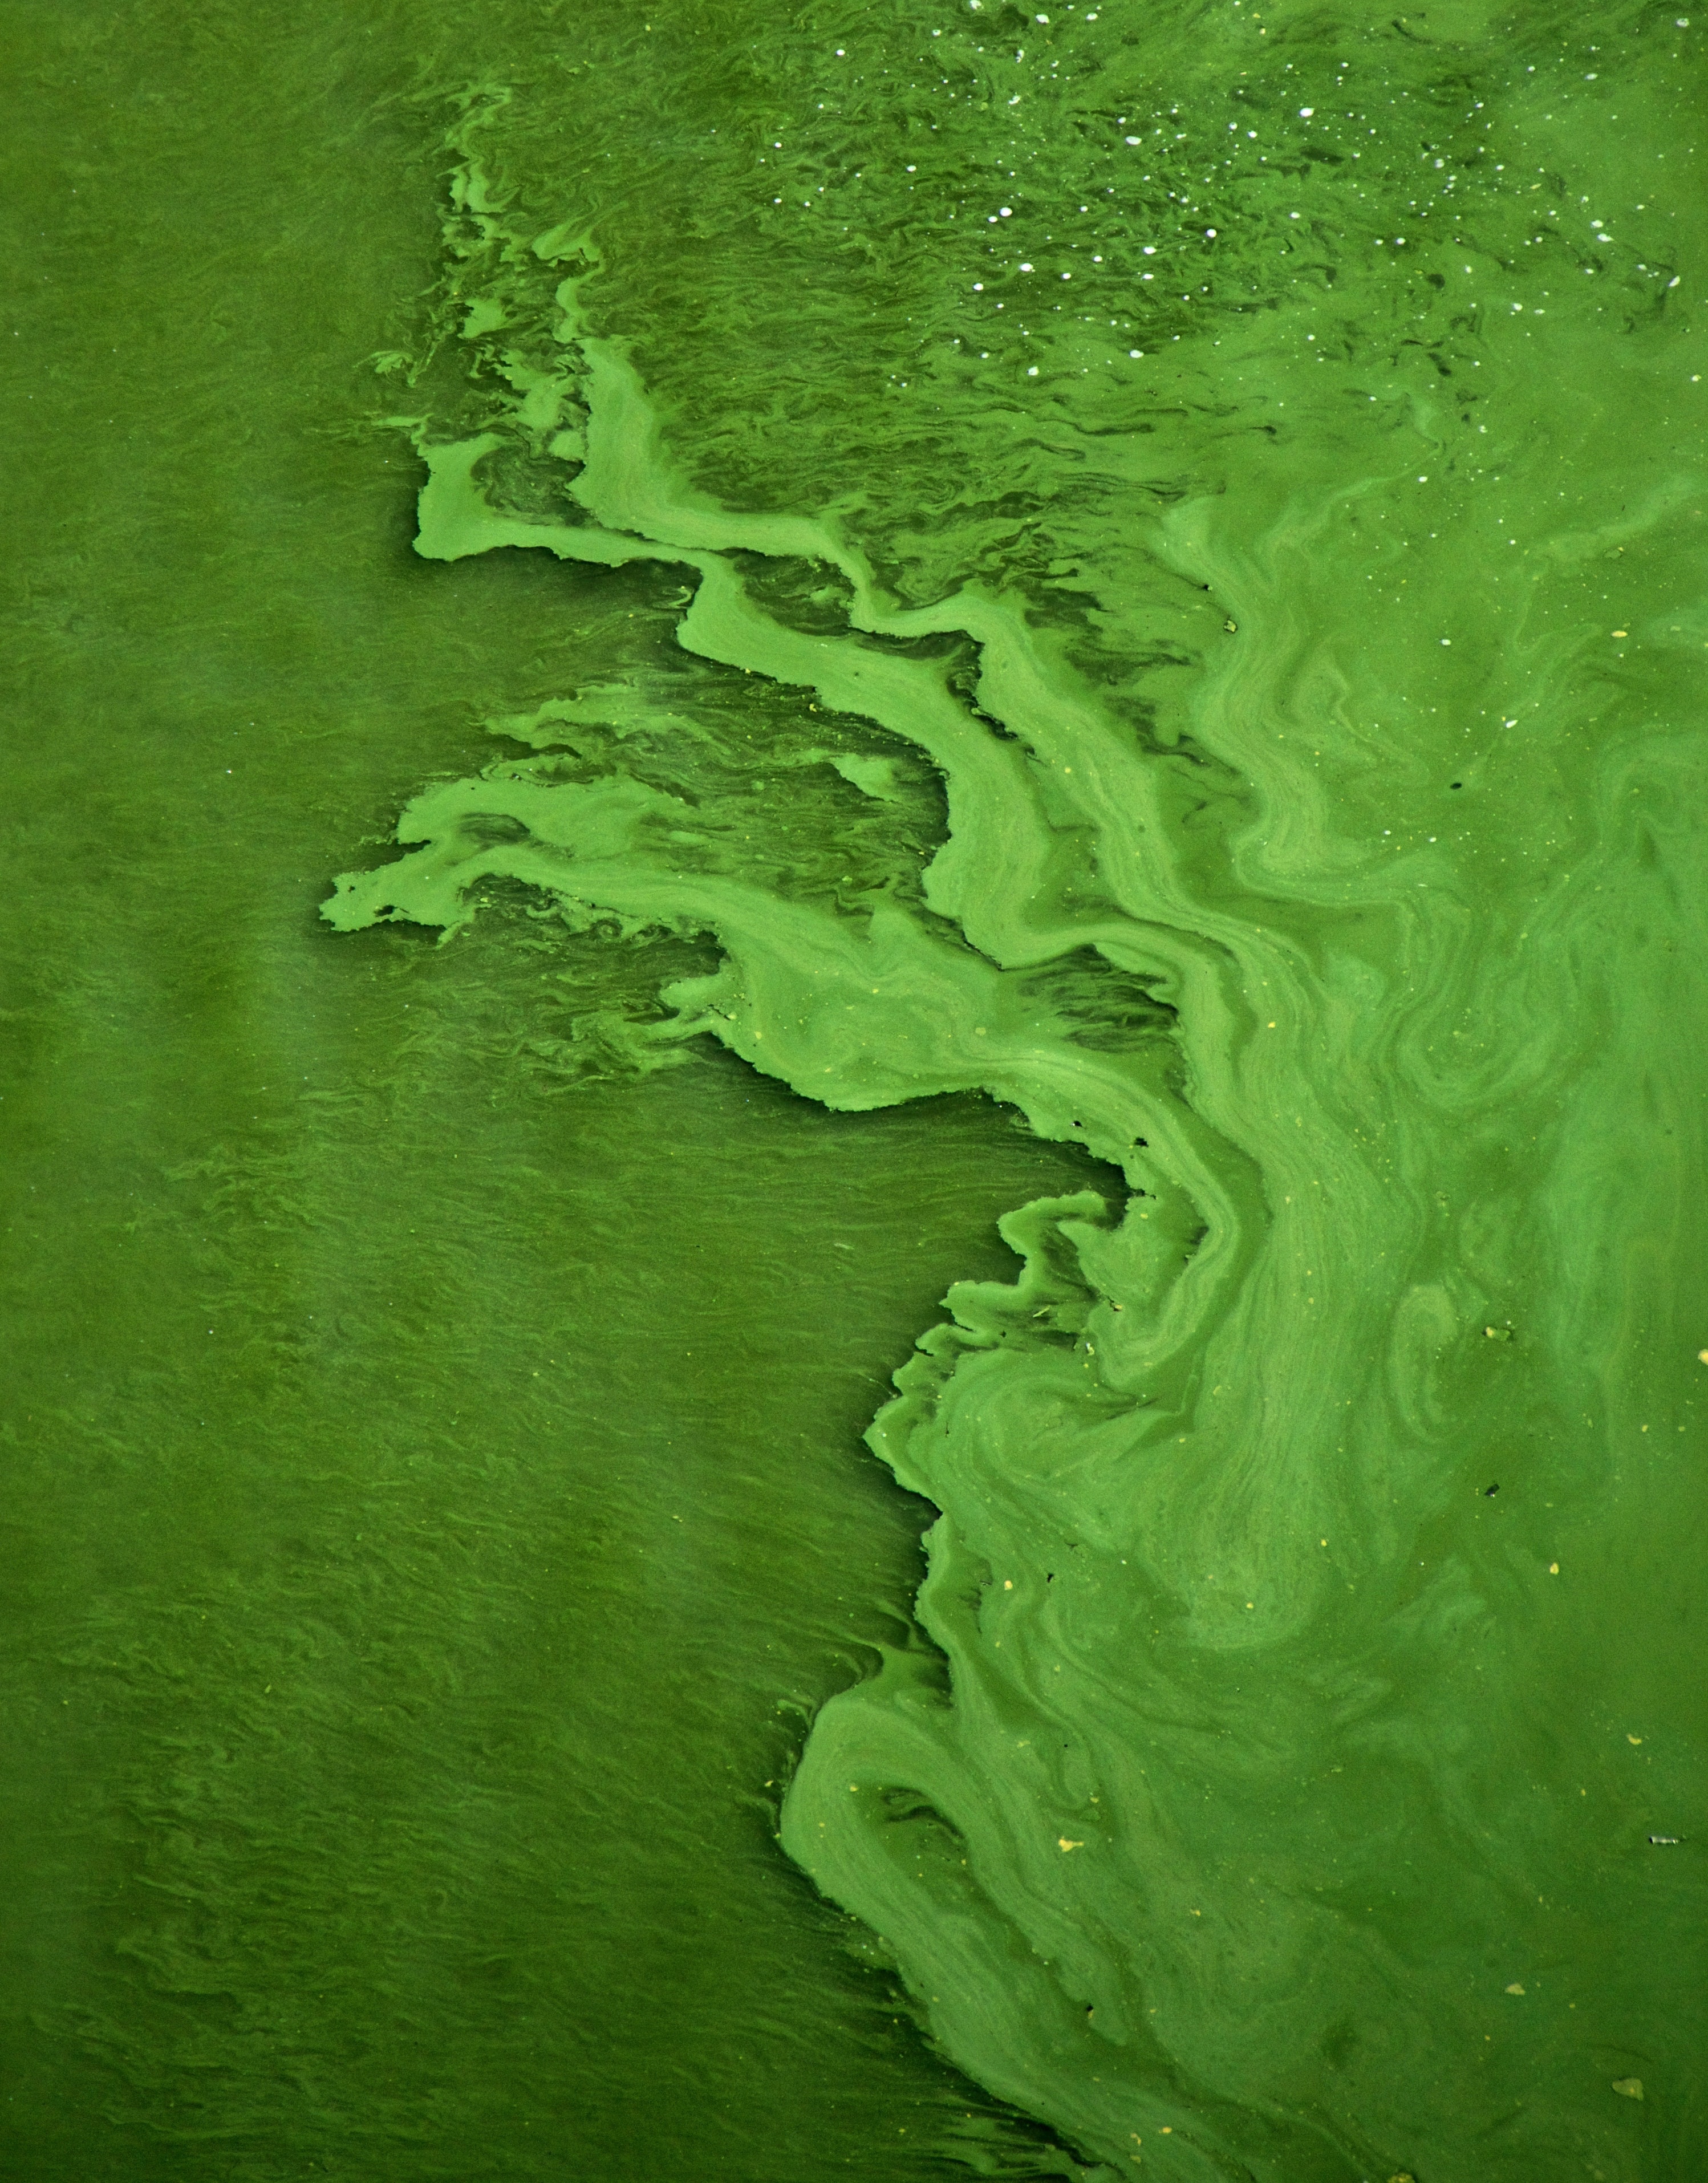 Toxic Algae Blooms